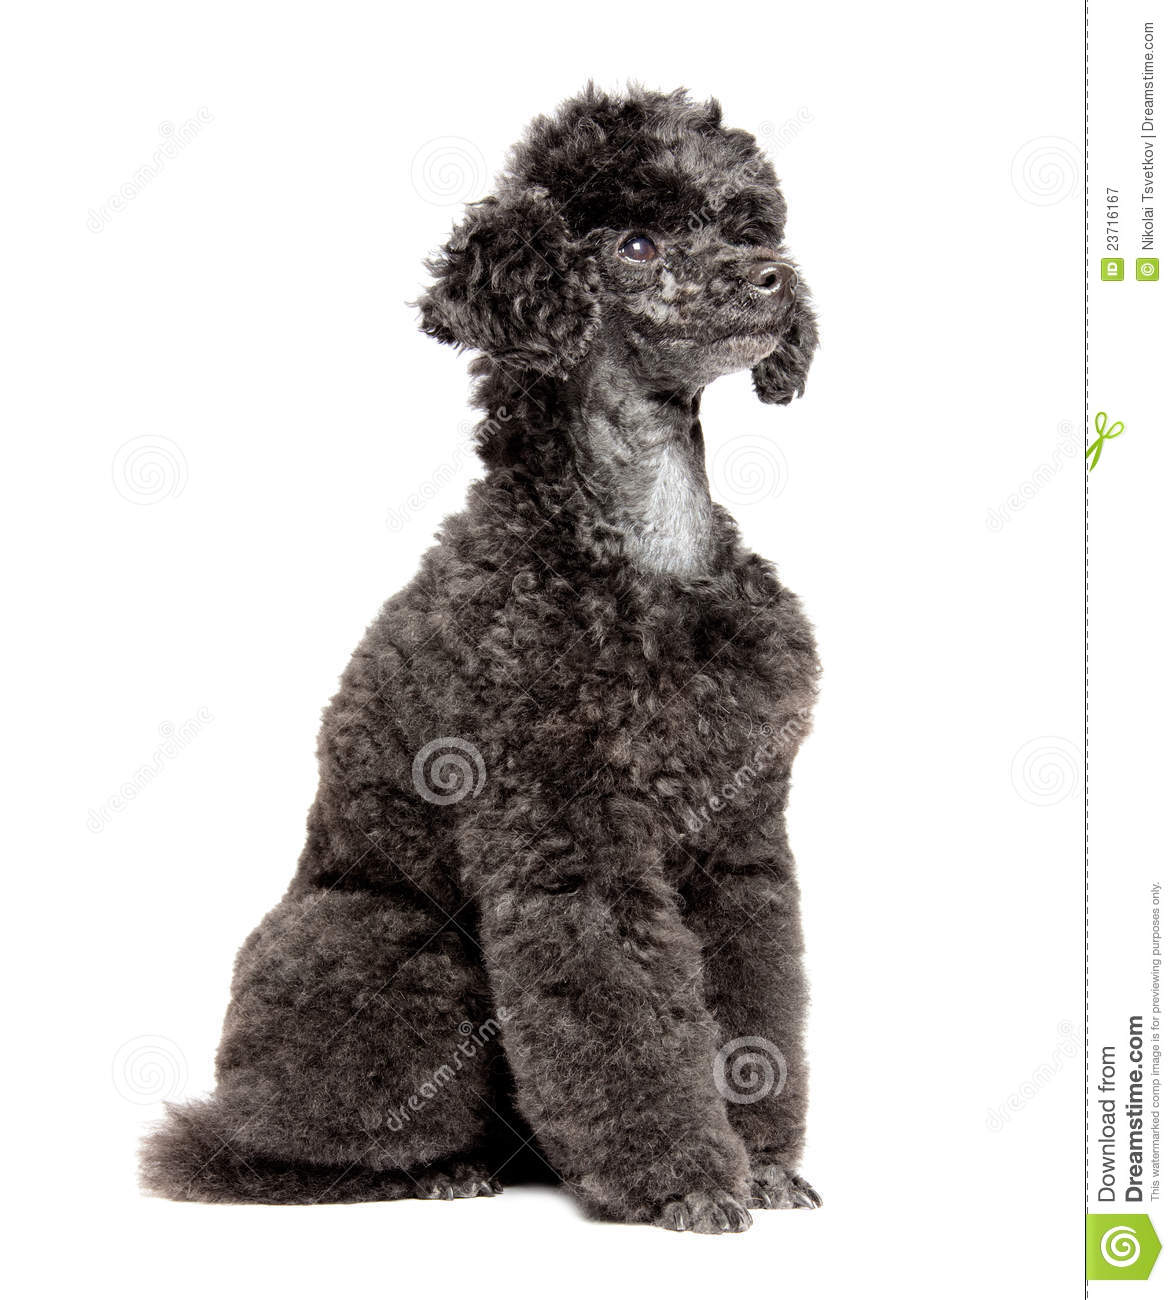 Black Toy Poodle Royalty Free Stock Photography   Image  23716167